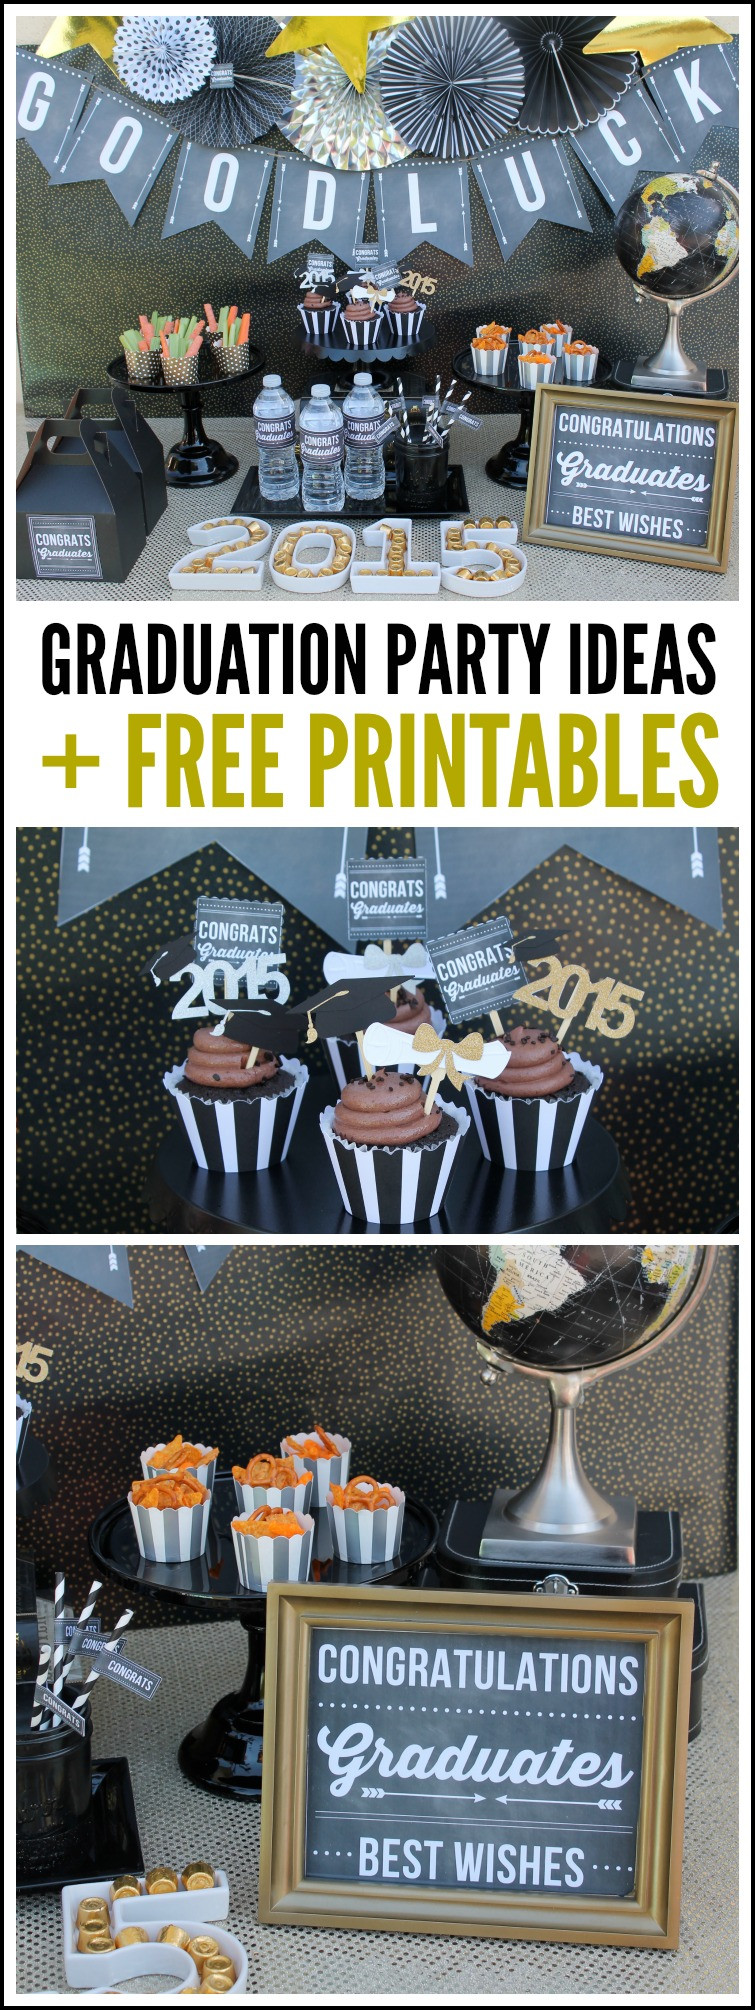 Graduation Party Theme Ideas
 Graduation Party Ideas Free Printables